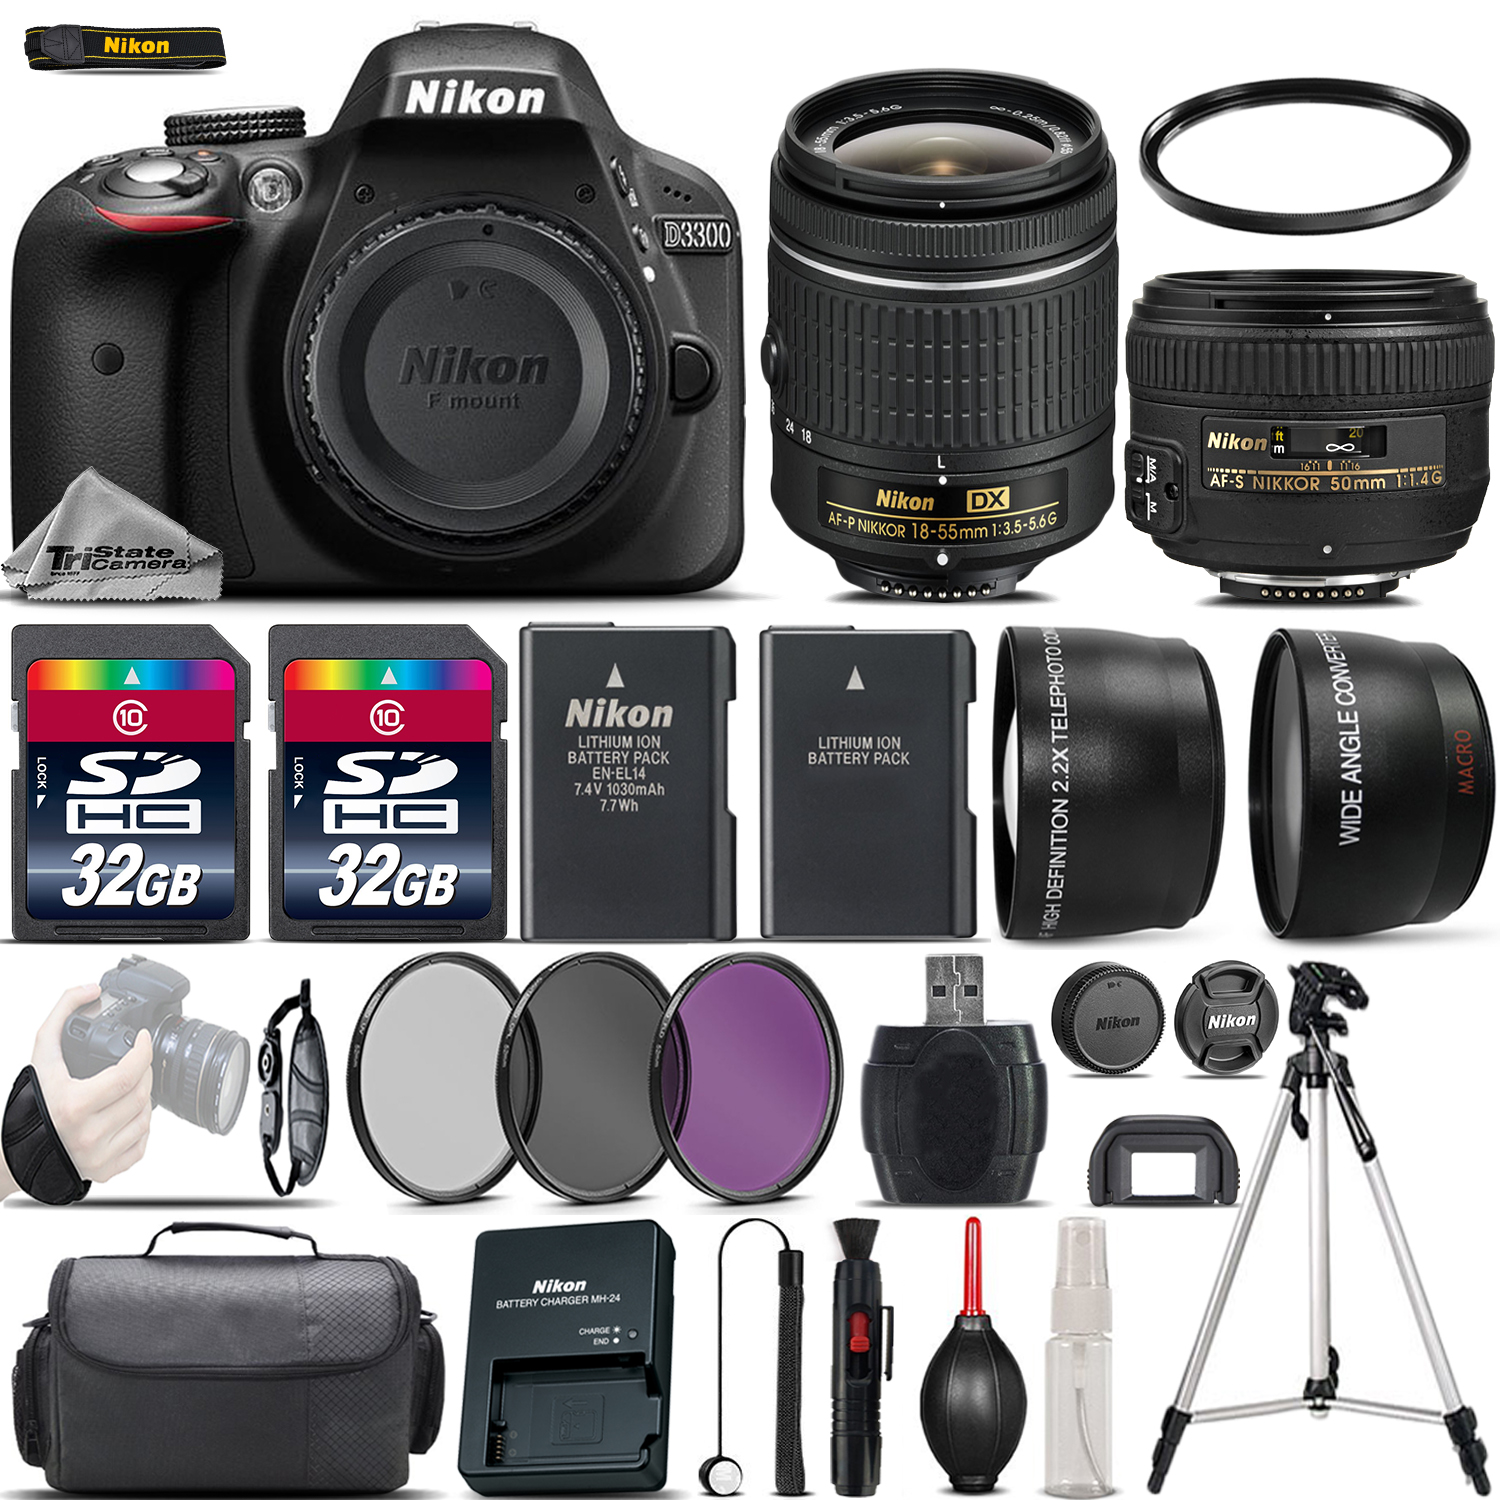 D3300 Digital SLR Camera + 18-55mm VR + 50mm 1.4G Lens + 64GB - 4 Lens Kit *FREE SHIPPING*